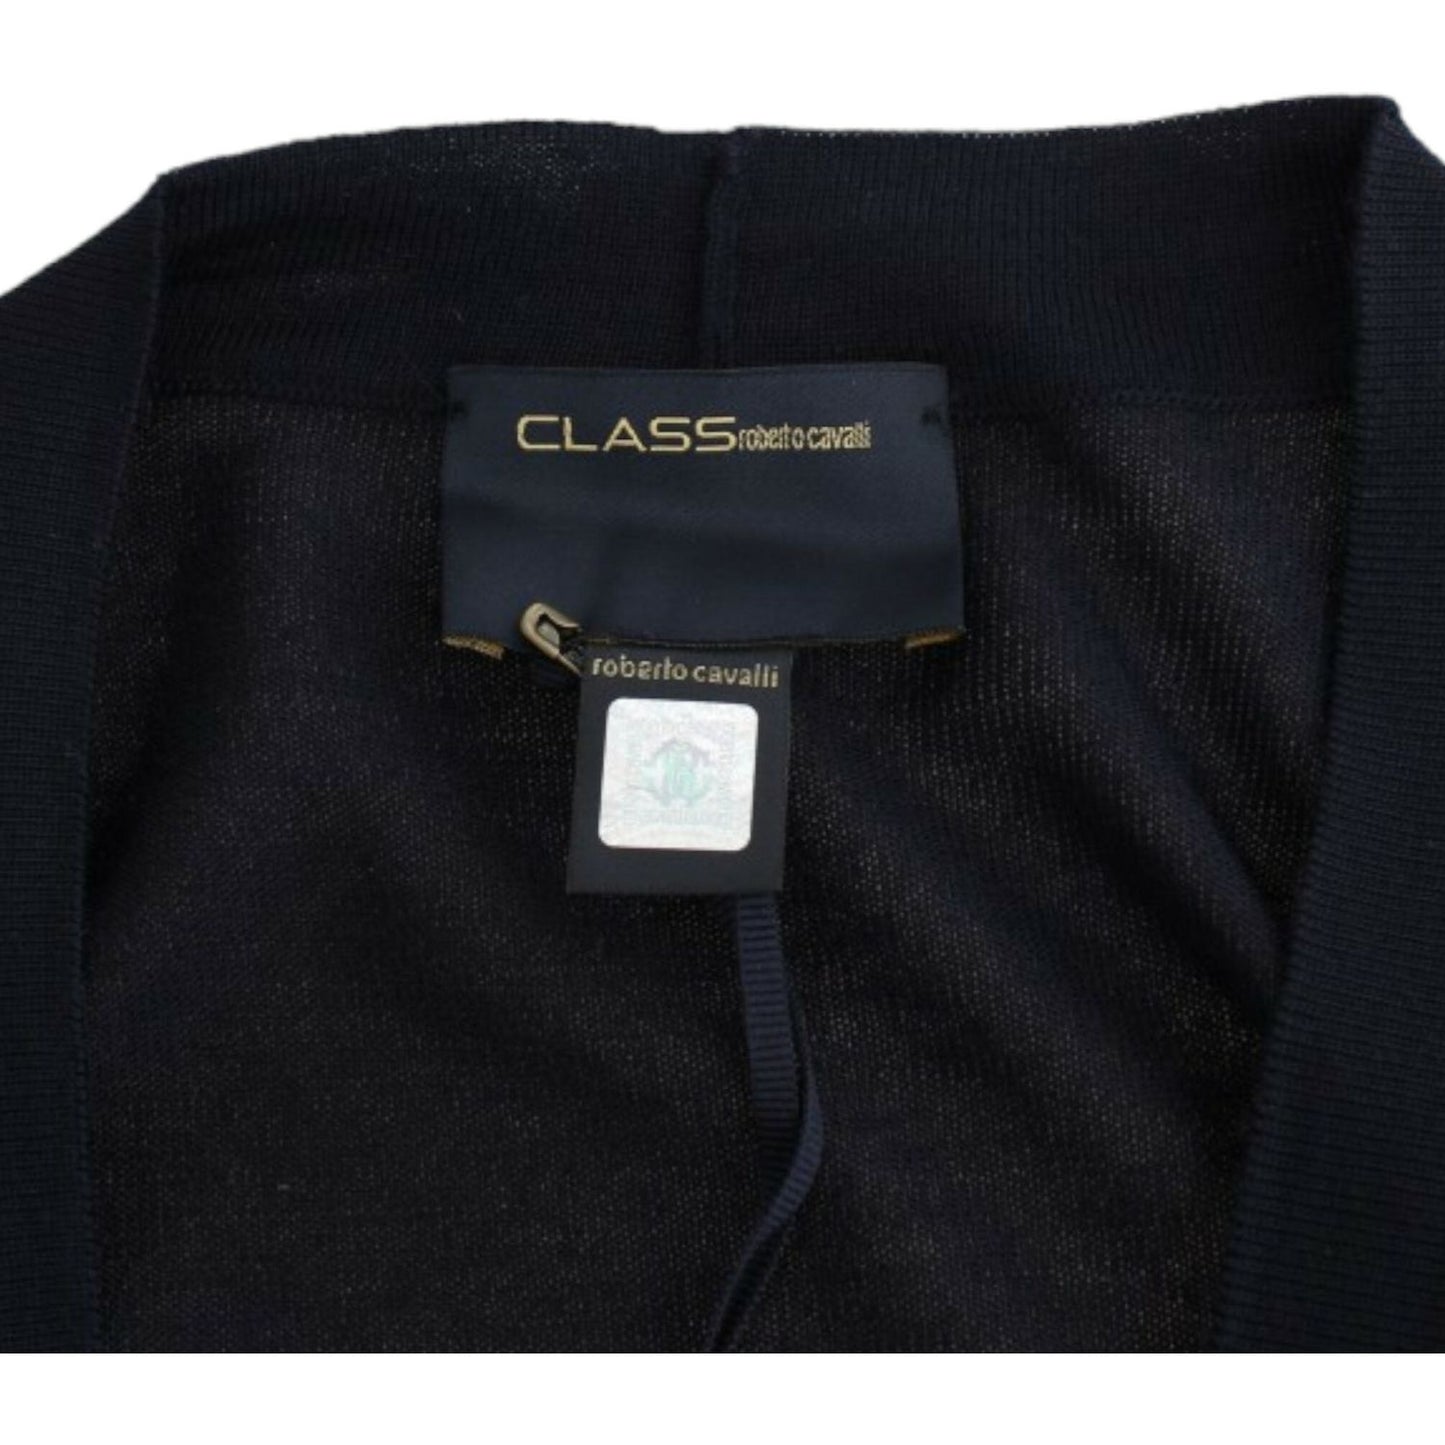 Cavalli Elegant Black Cropped Virgin Wool Cardigan black-cropped-wool-cardigan 8968-black-cropped-wool-cardigan-5-scaled-b8599350-890.jpg